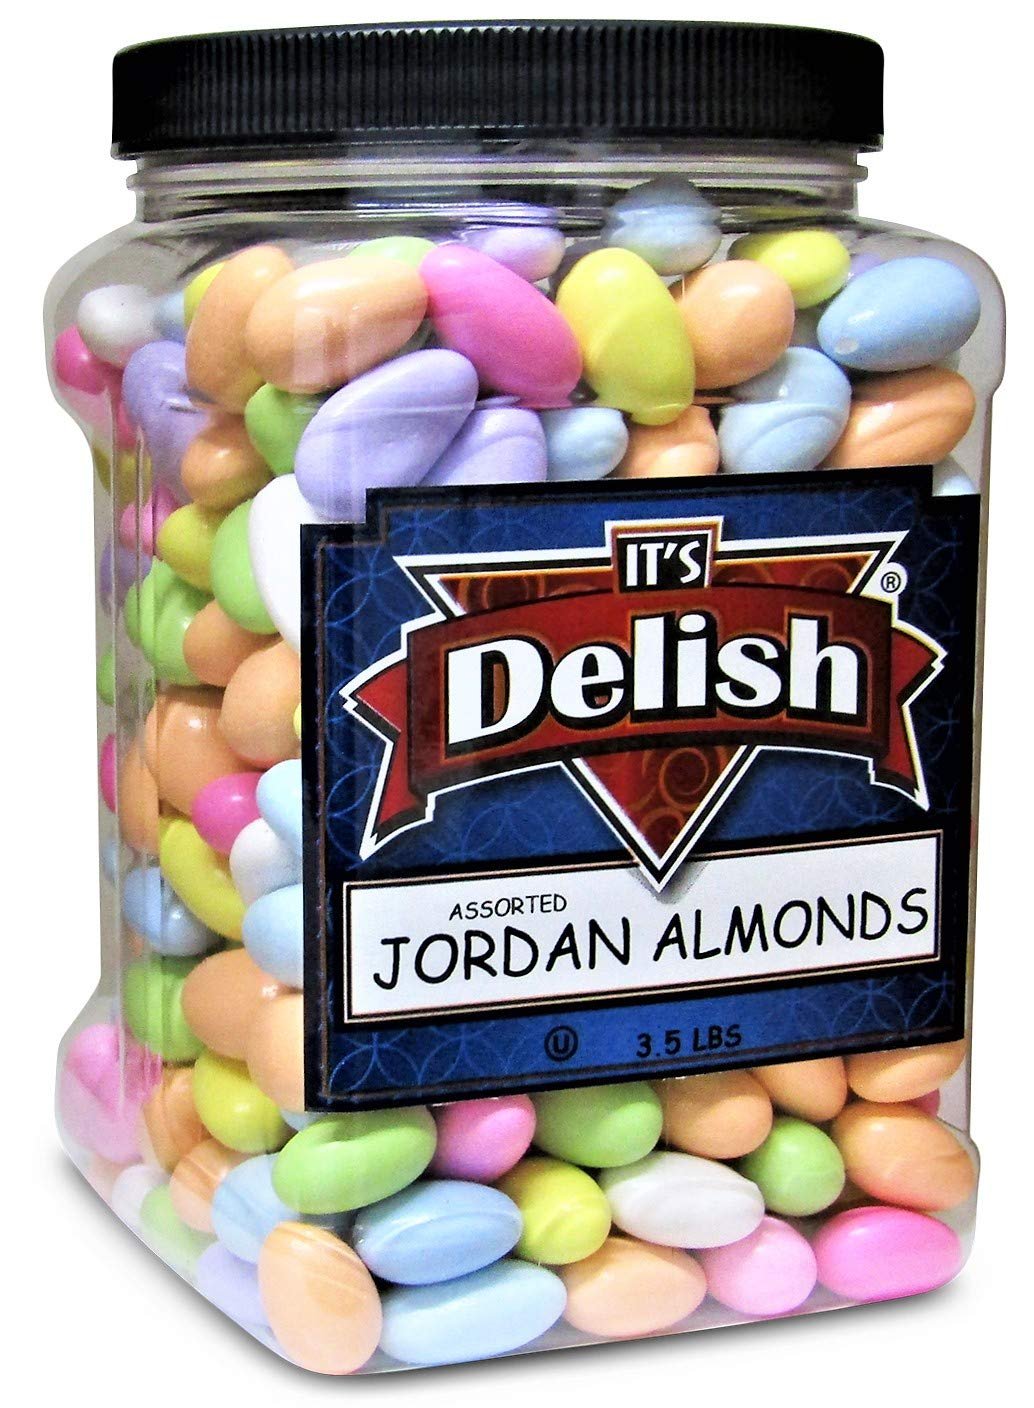 Assorted Jordan Almonds, 3.5 lbs Jumbo Jar